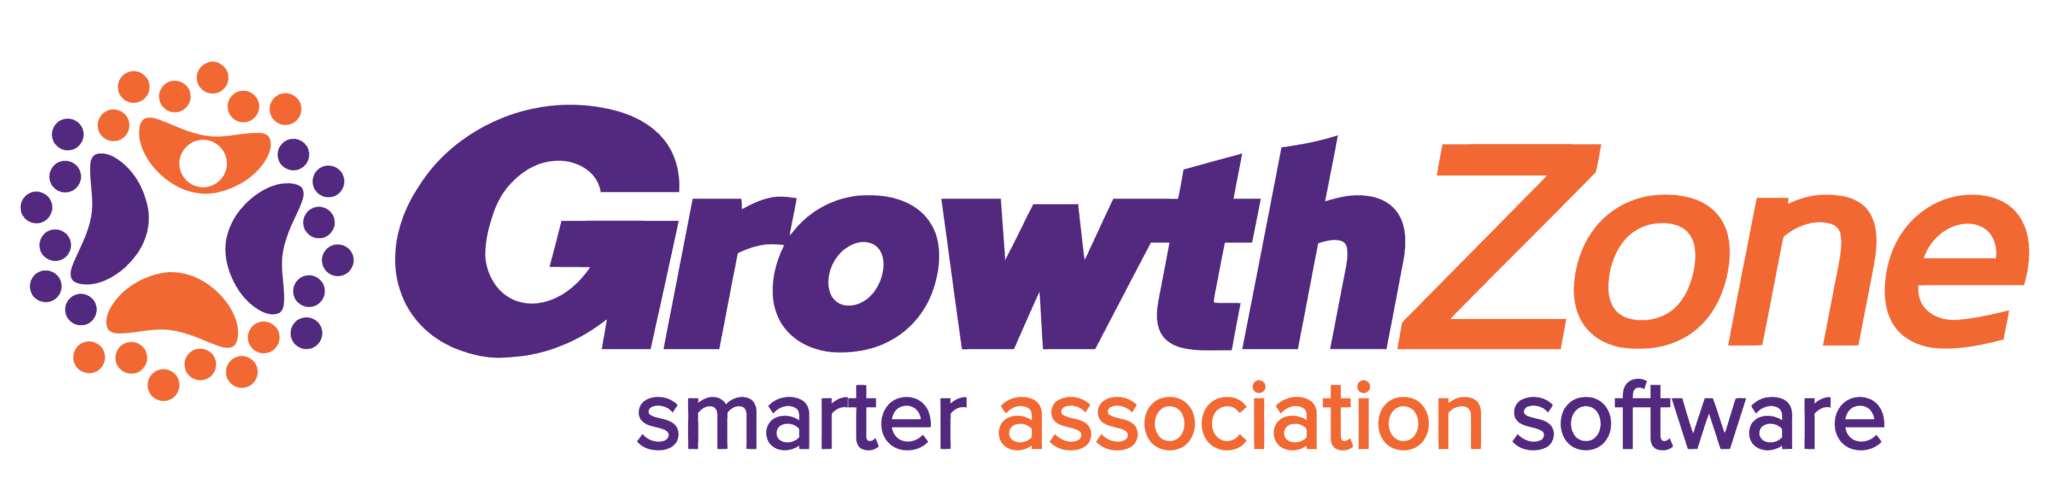 growthzone logo